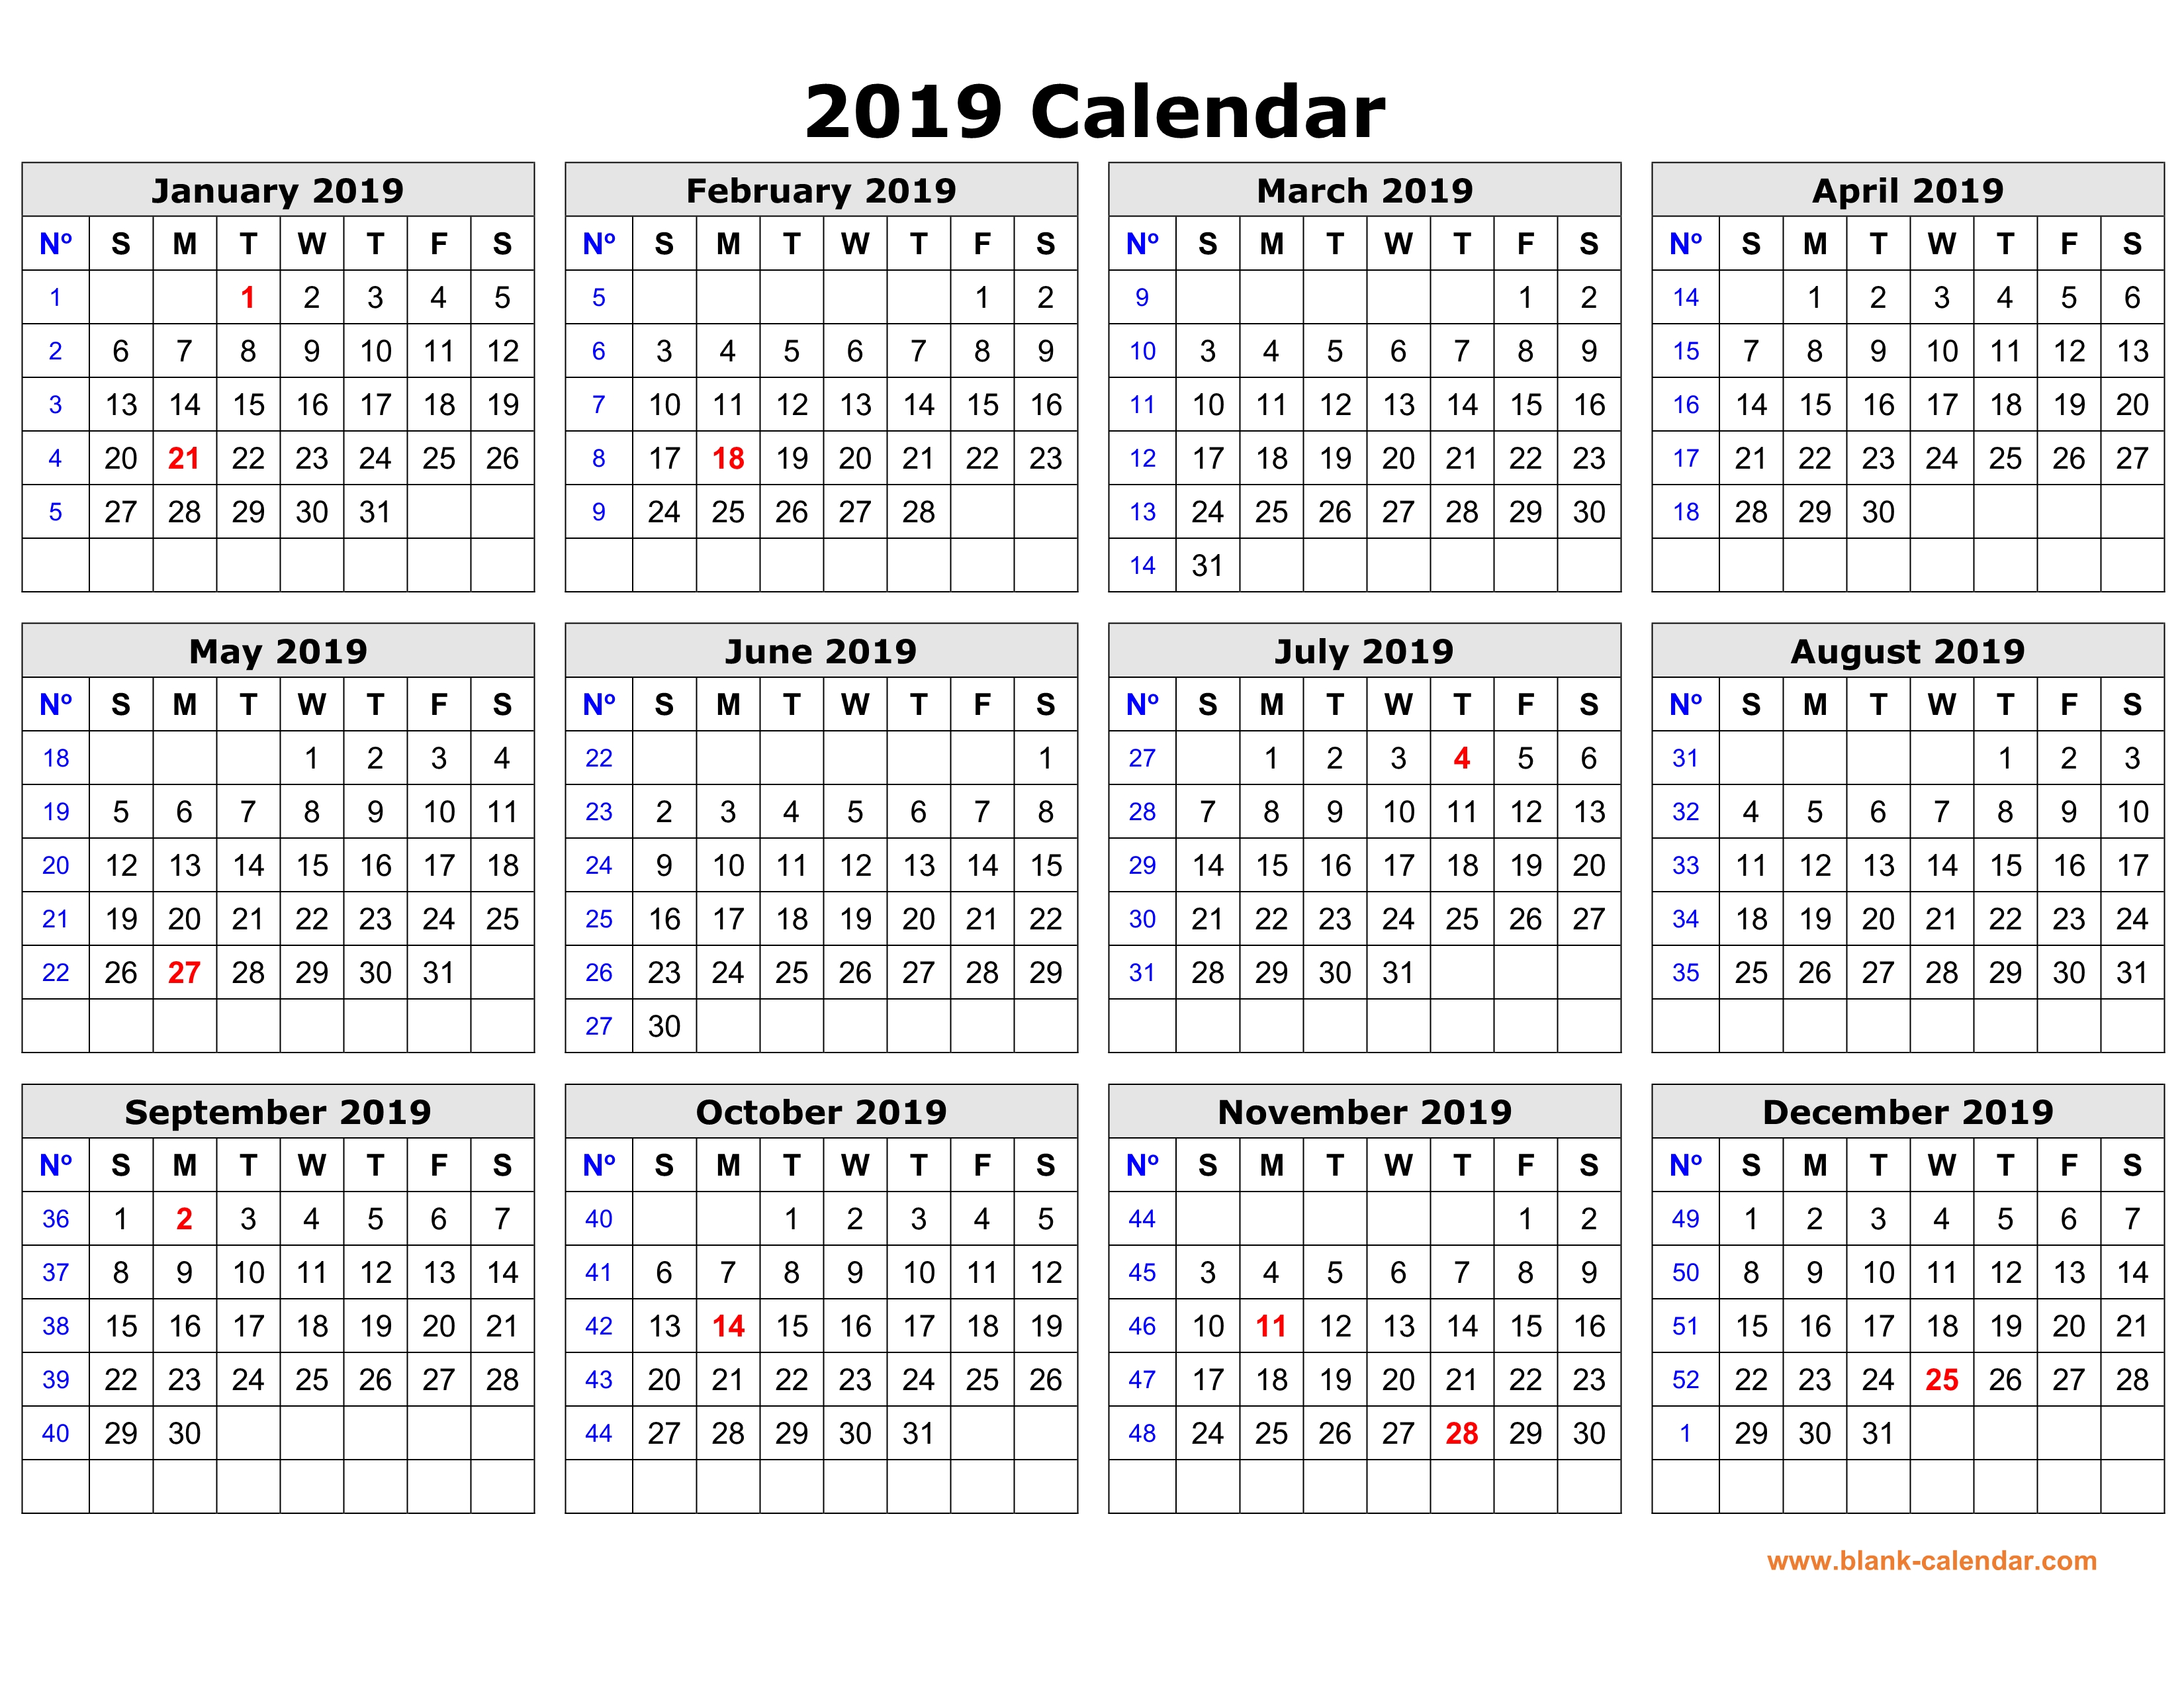 may-2019-calendar-printable-with-holidays-whatisthedatetoday-com